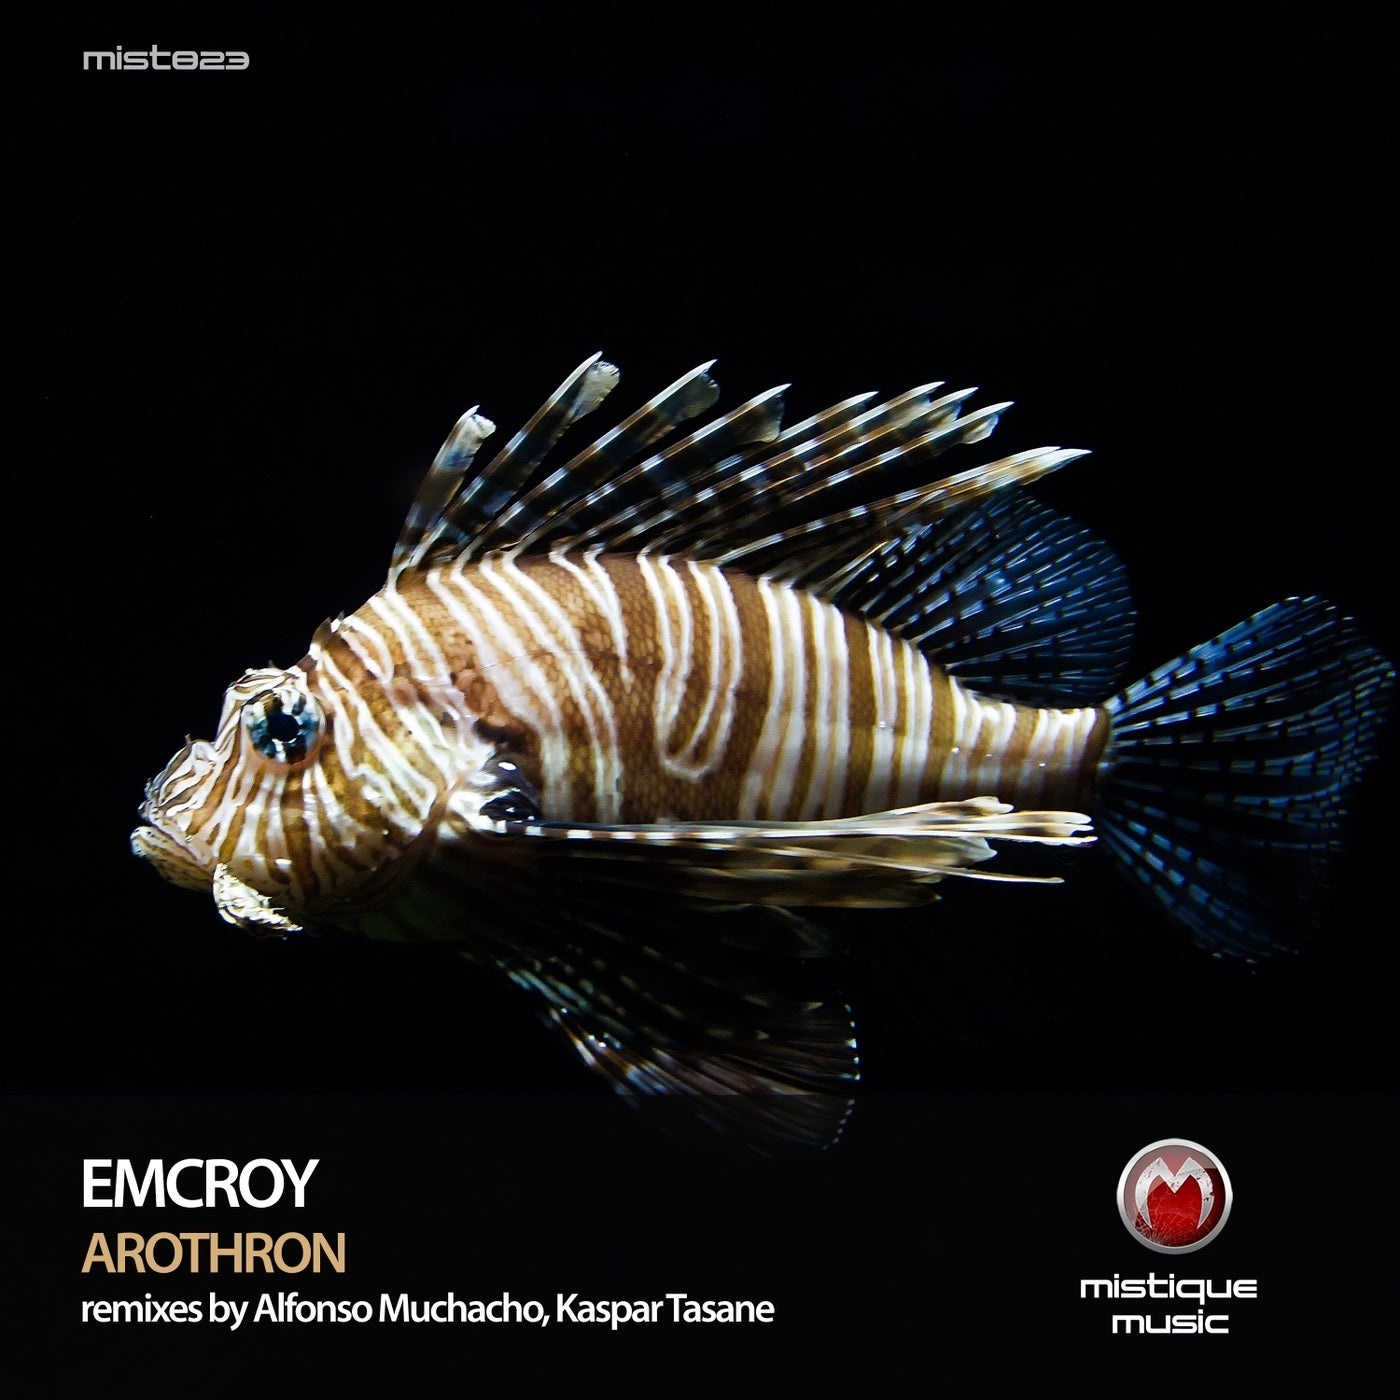 Emcroy - Arothron [MIST823]